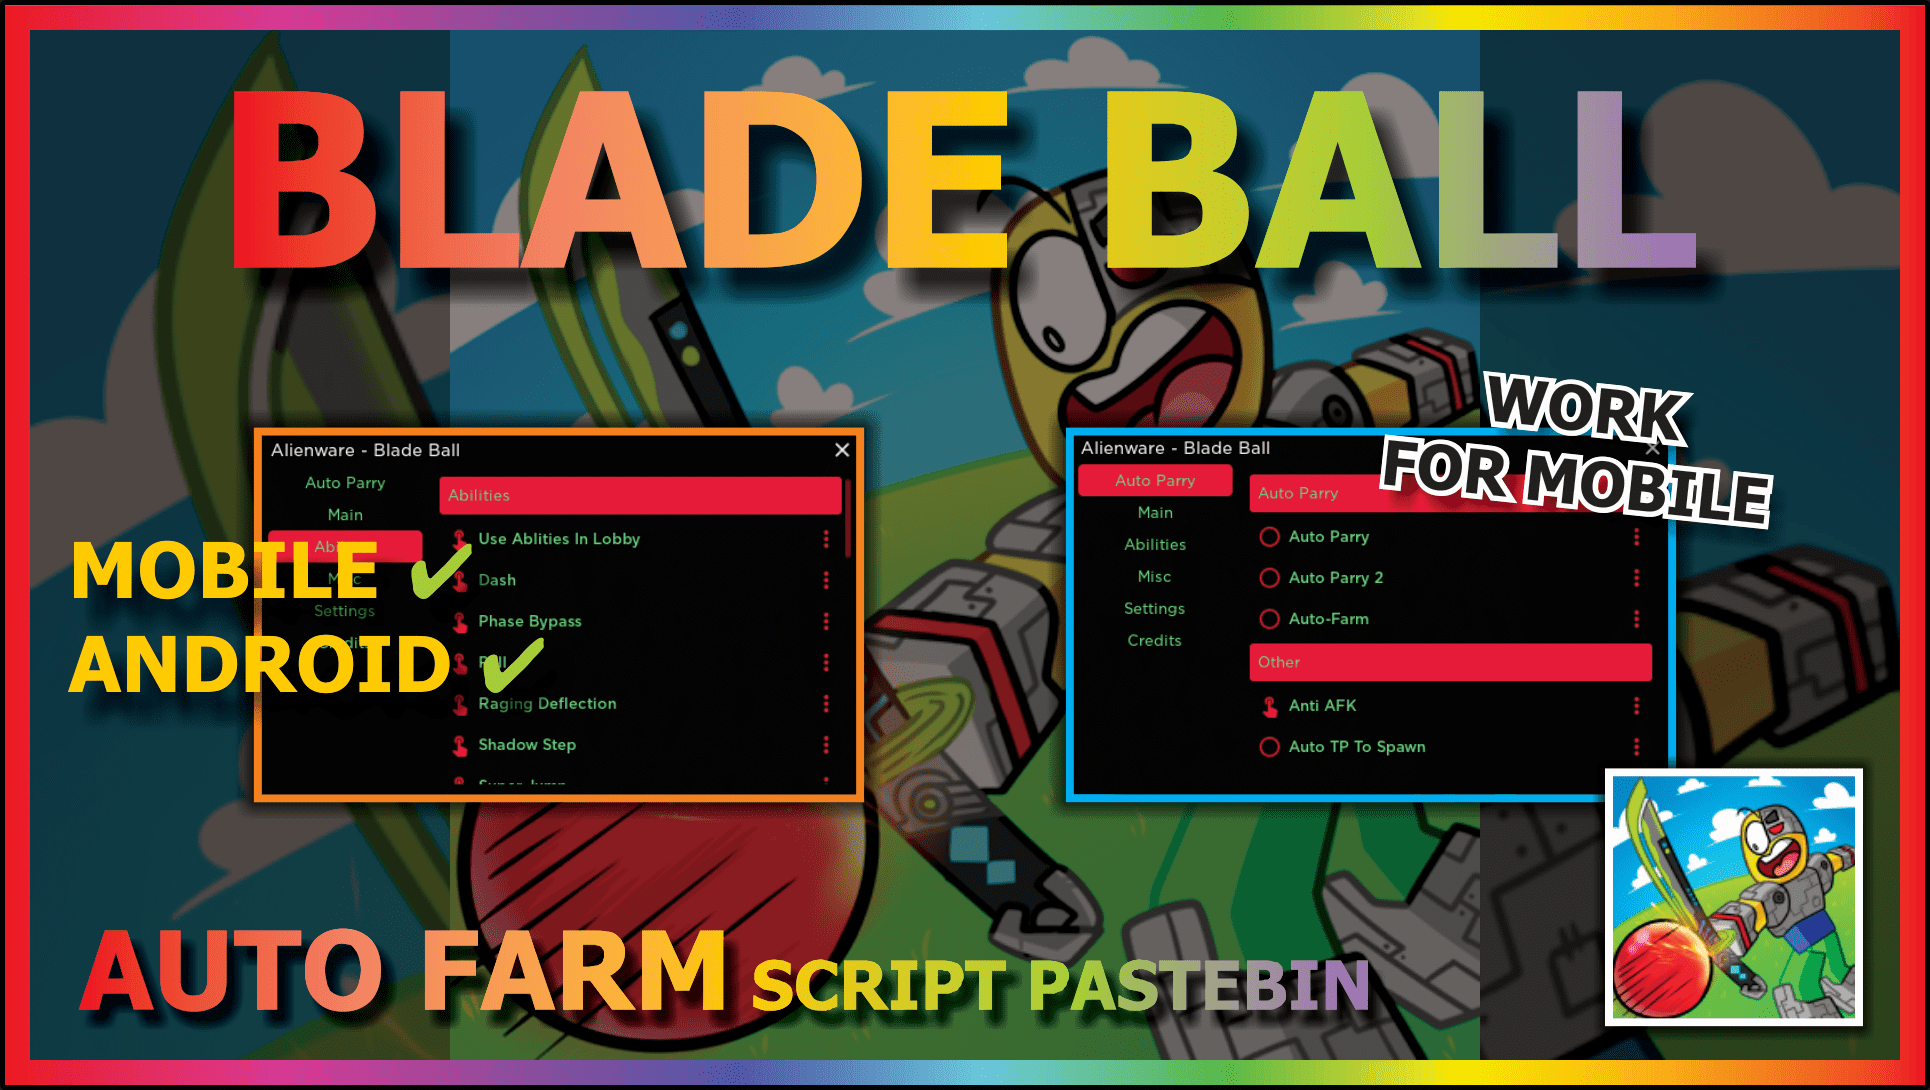 PASTEBIN] The *BEST* Blade Ball Script ⚾